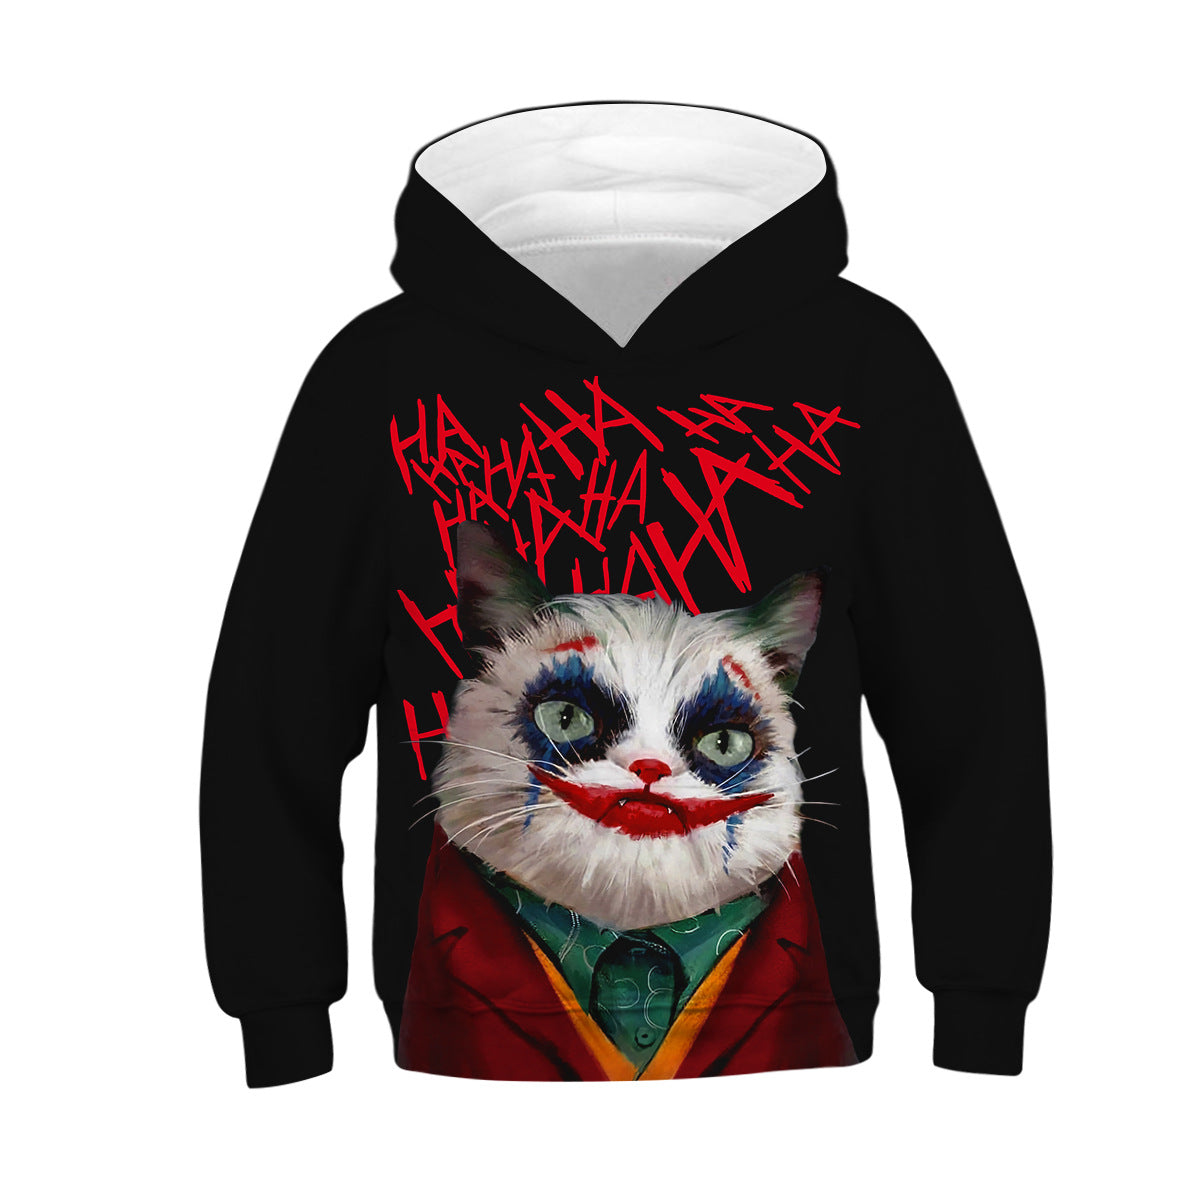 Kids joker cat Sweatshirt - mihoodie